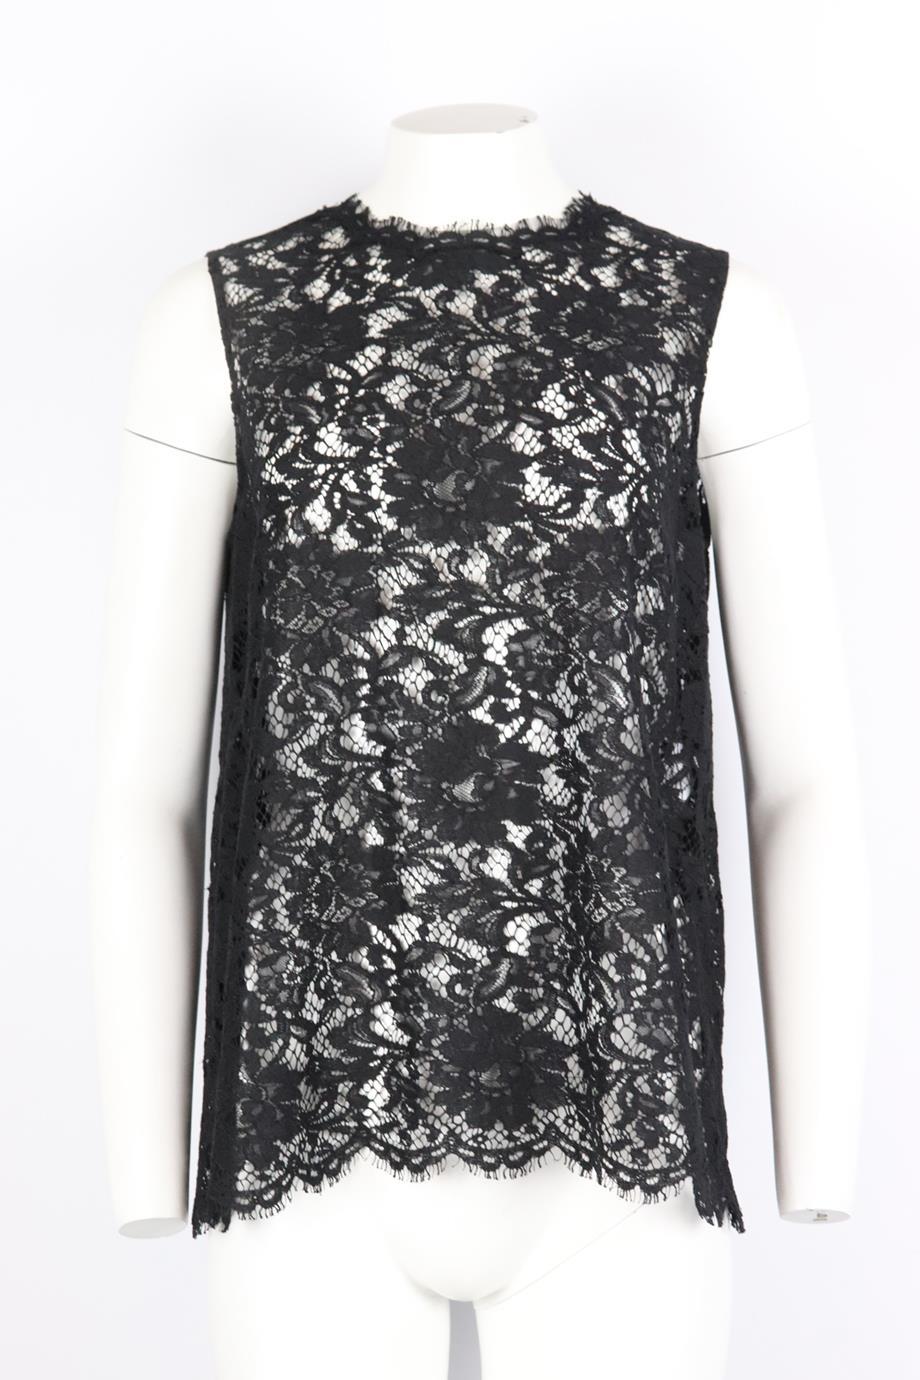 Dolce & Gabbana cotton blend corded lace top. Black. Sleeveless, crewneck. Zip fastening at back. 58% Cotton, 35% viscose, 7% polyamide; lining: 76% silk, 4% elastane, 4% polyamide. Size: IT 48 (UK 16, US 12, FR 44). Bust: 41 in. Waist: 42.4 in.